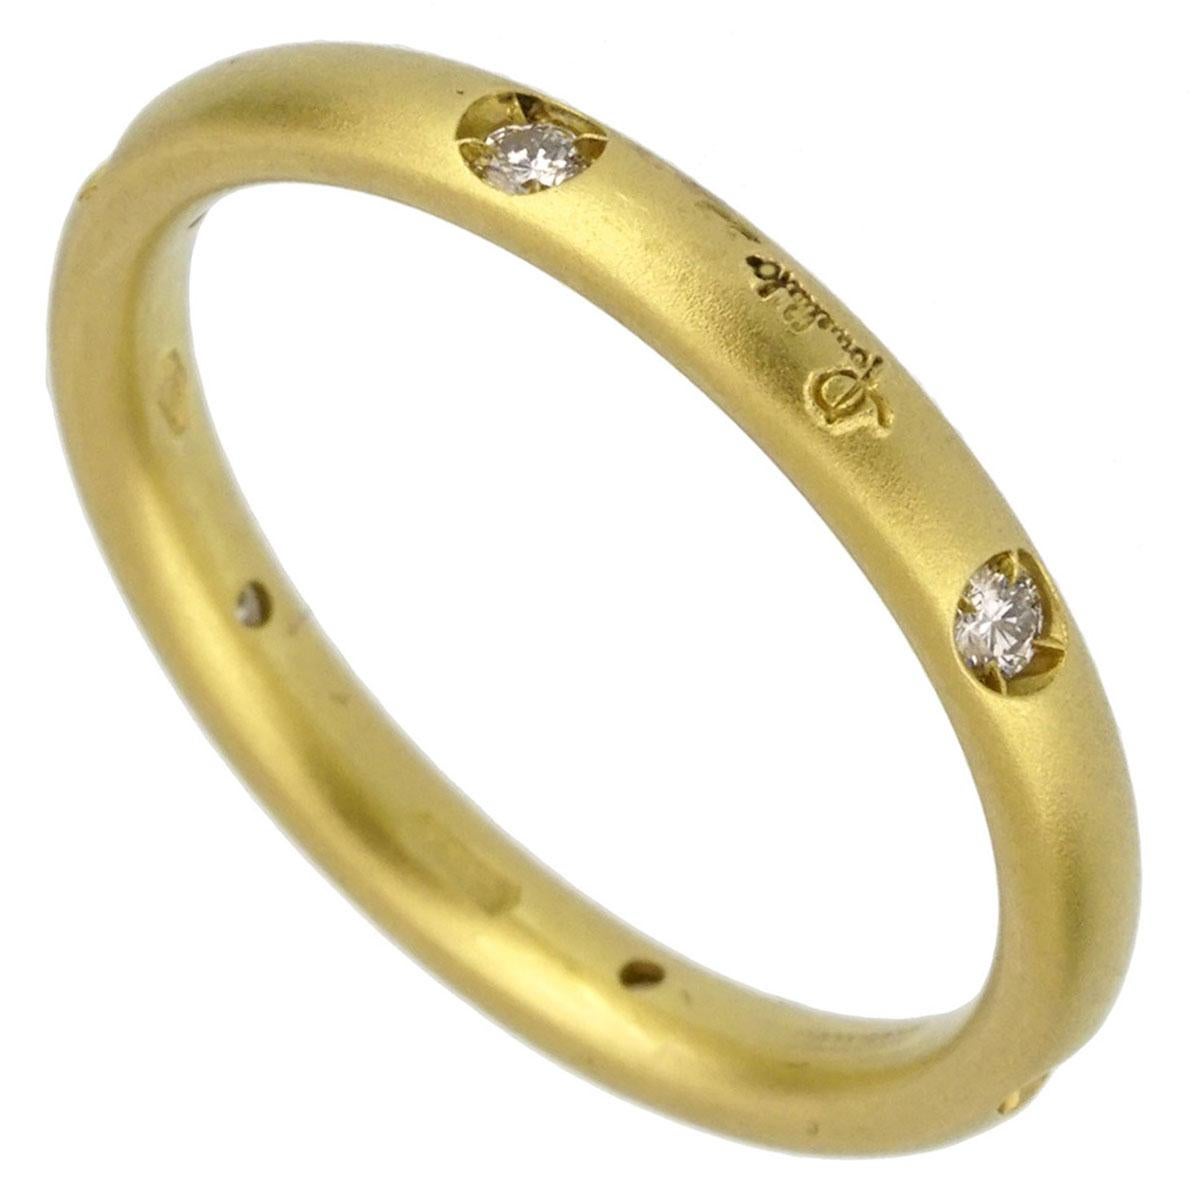 yanai mudi ring in gold